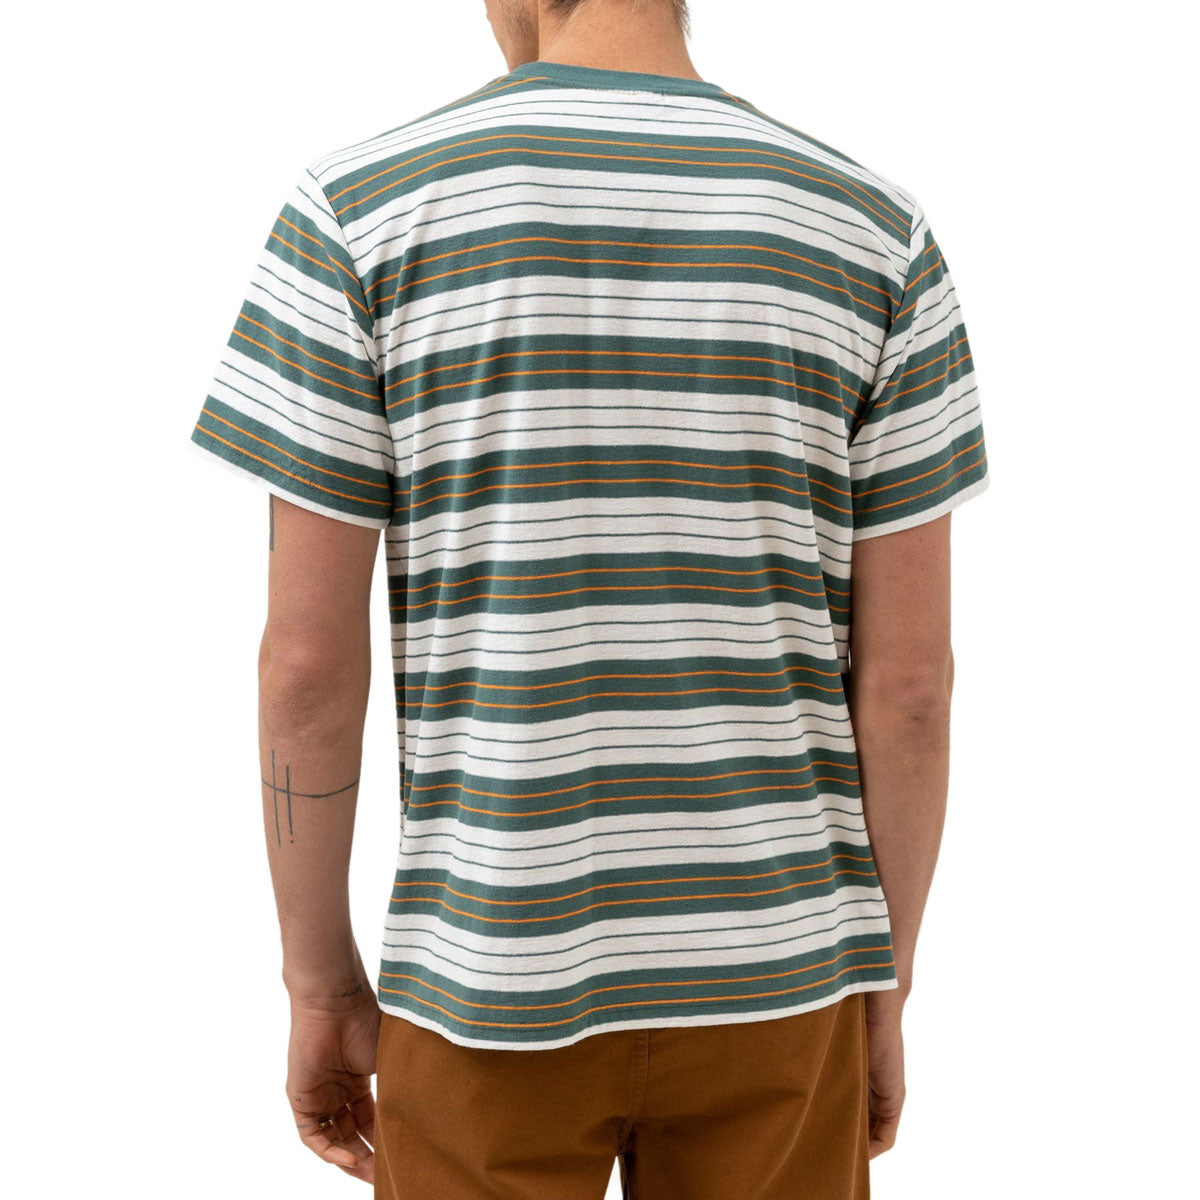 Rhythm Vintage Stripe T-Shirt - Teal image 3